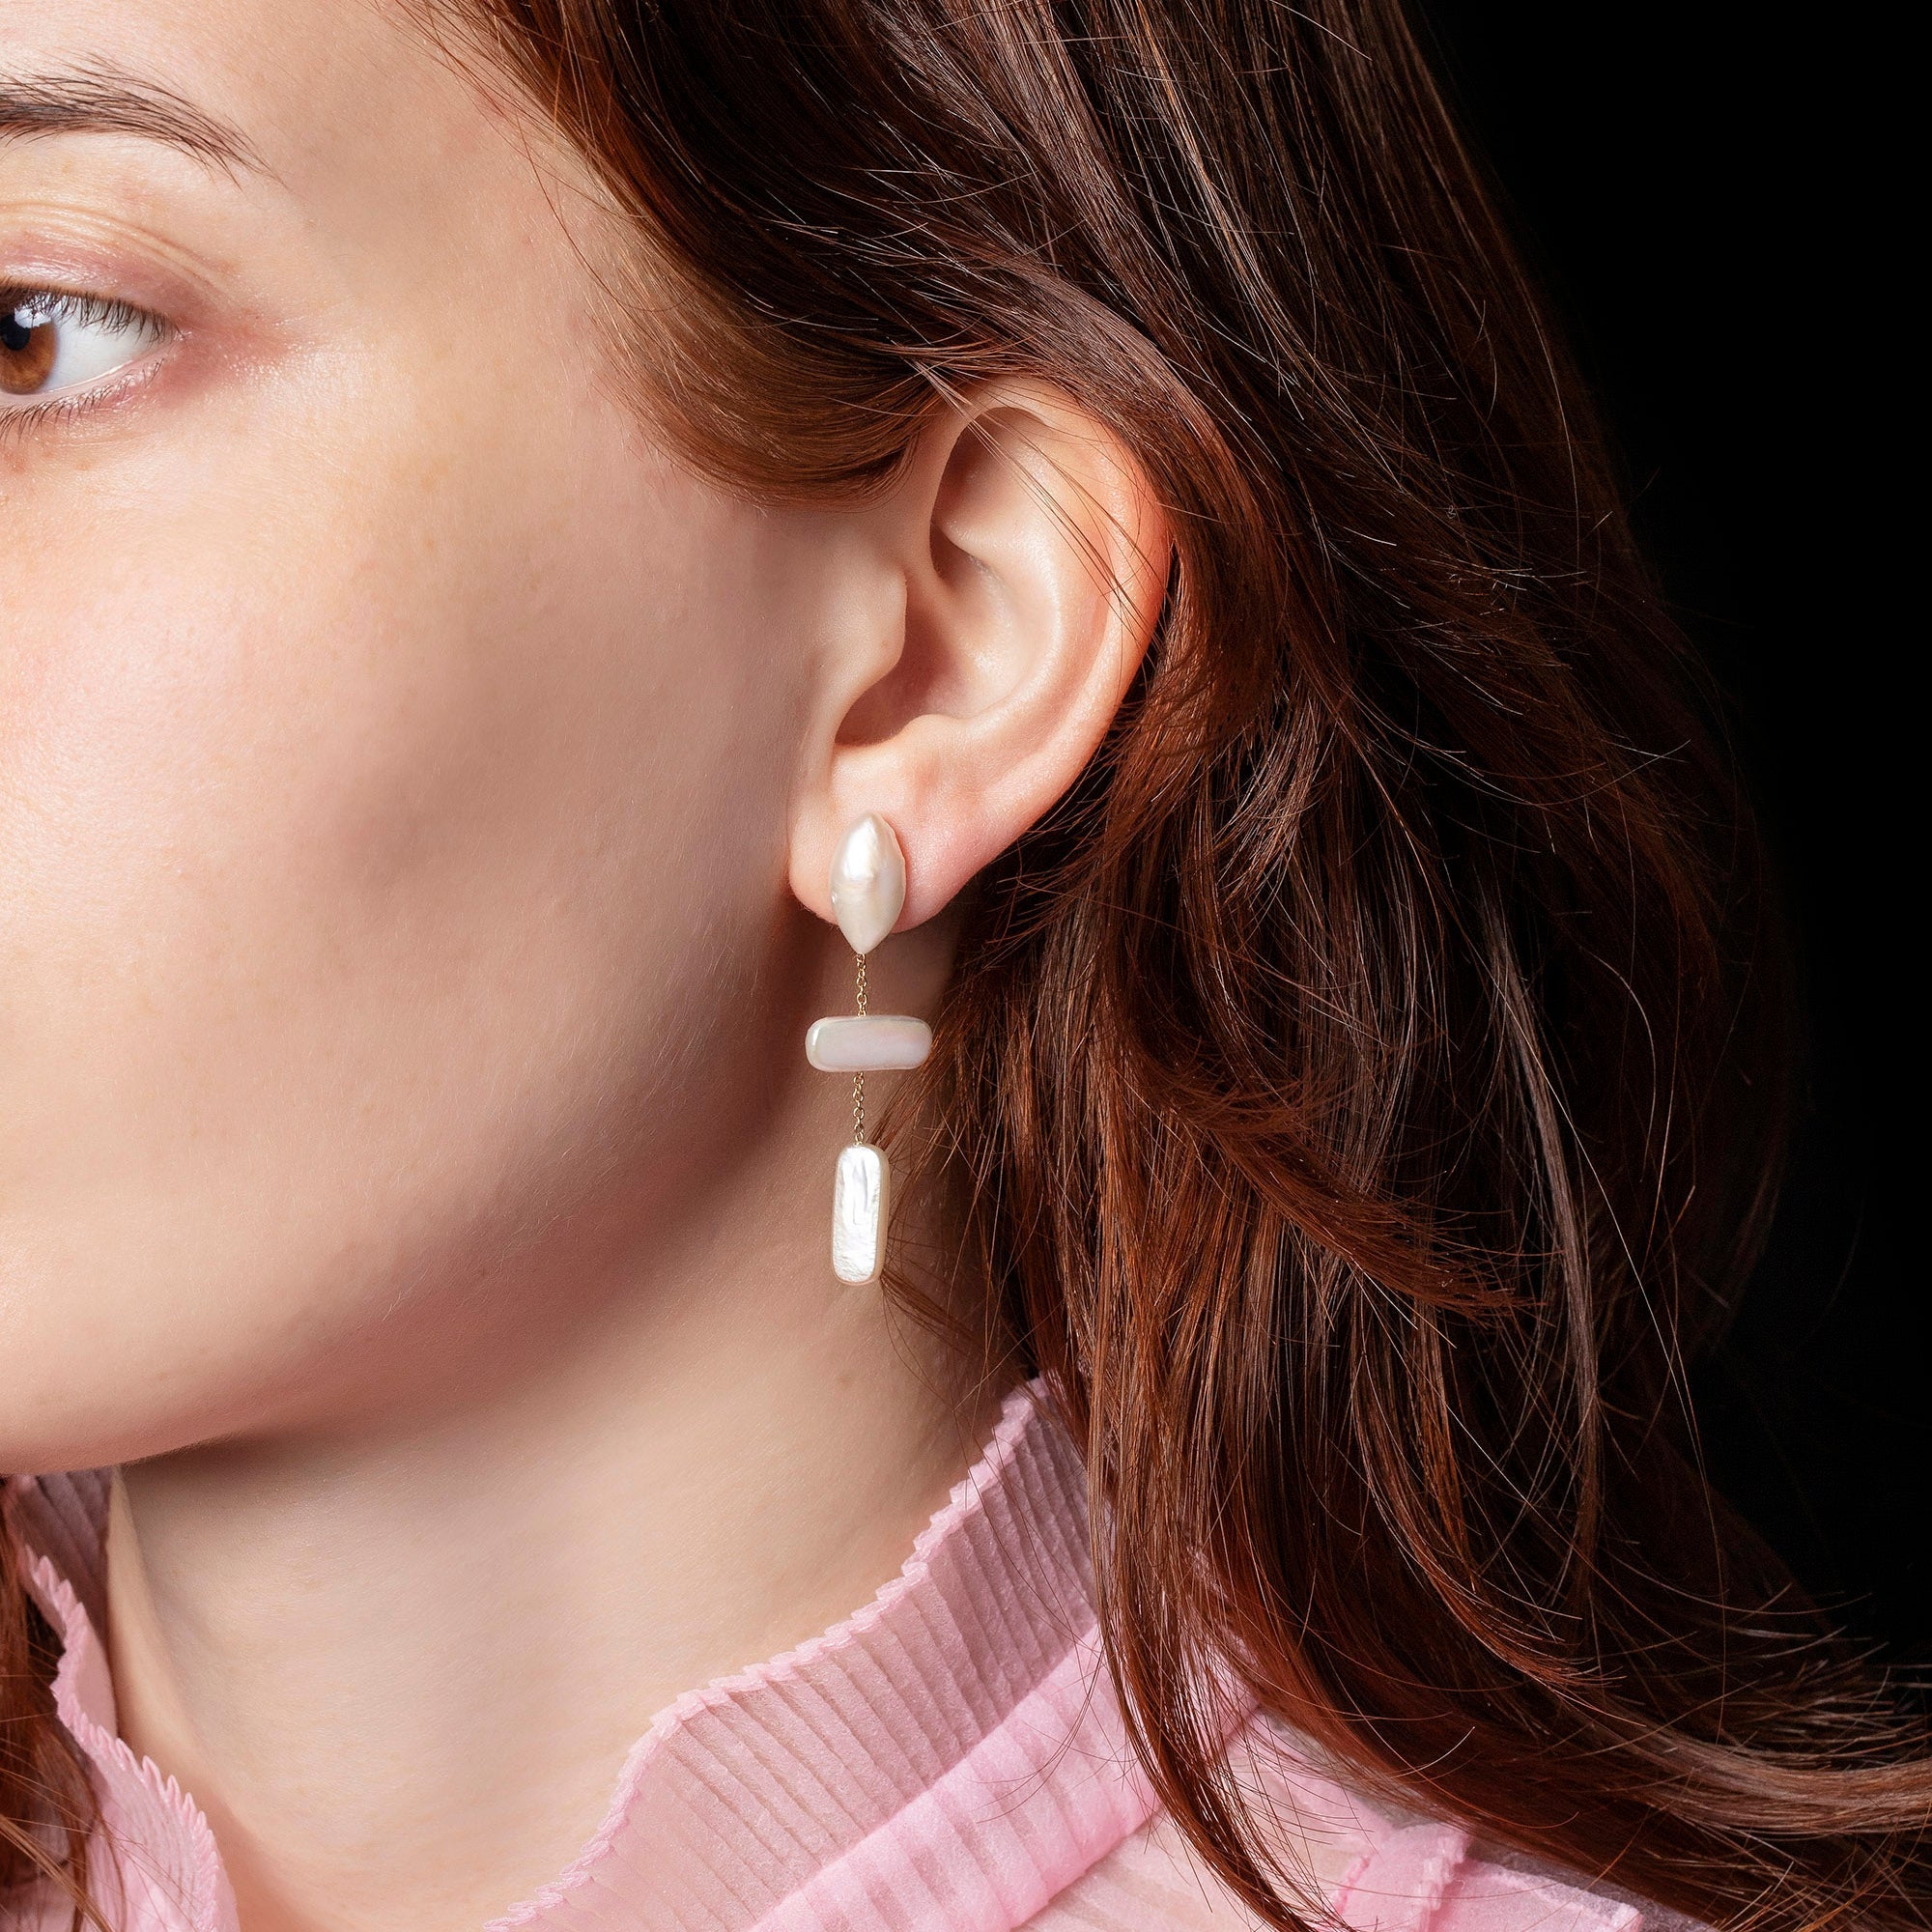 product_details::Nauplius Earrings on model.